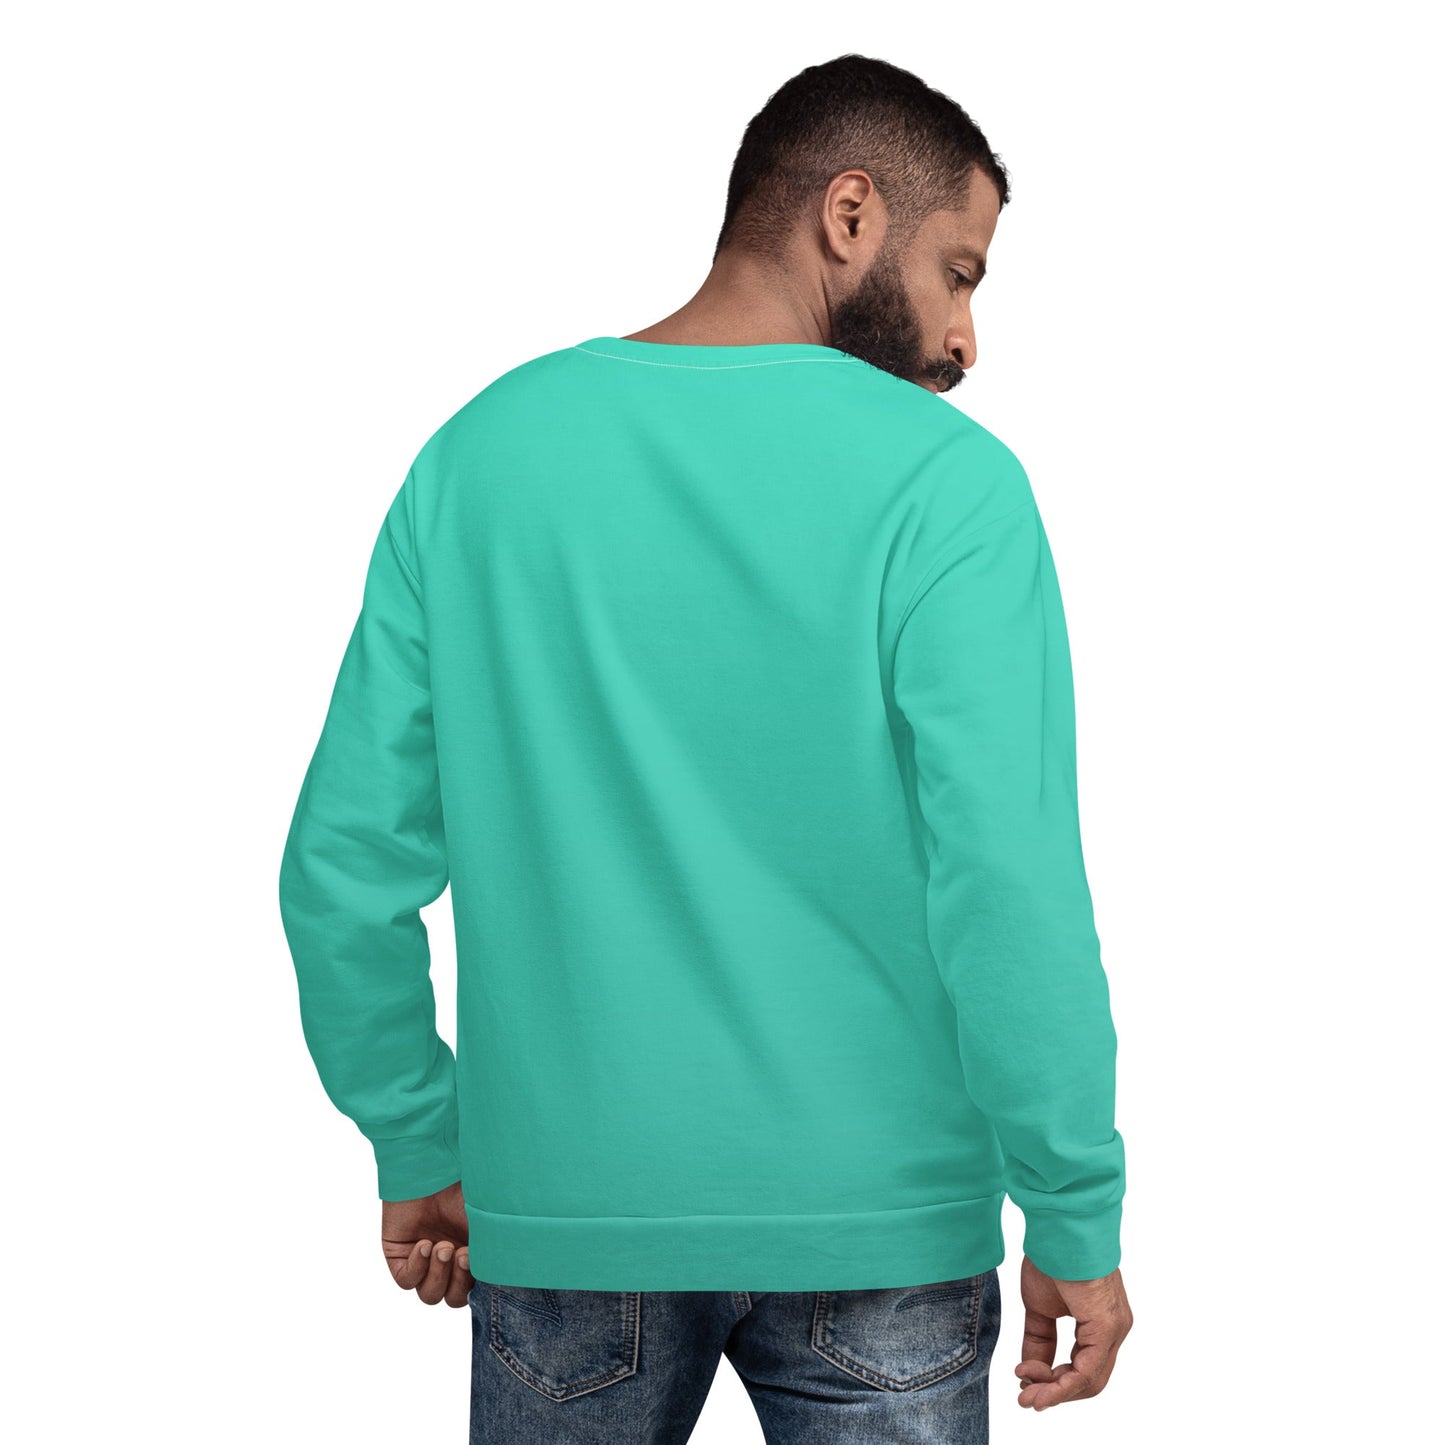 The Glitch Racer Unisex Sweatshirt adult disney dressadult vannelope costumecharacter style#tag4##tag5##tag6#